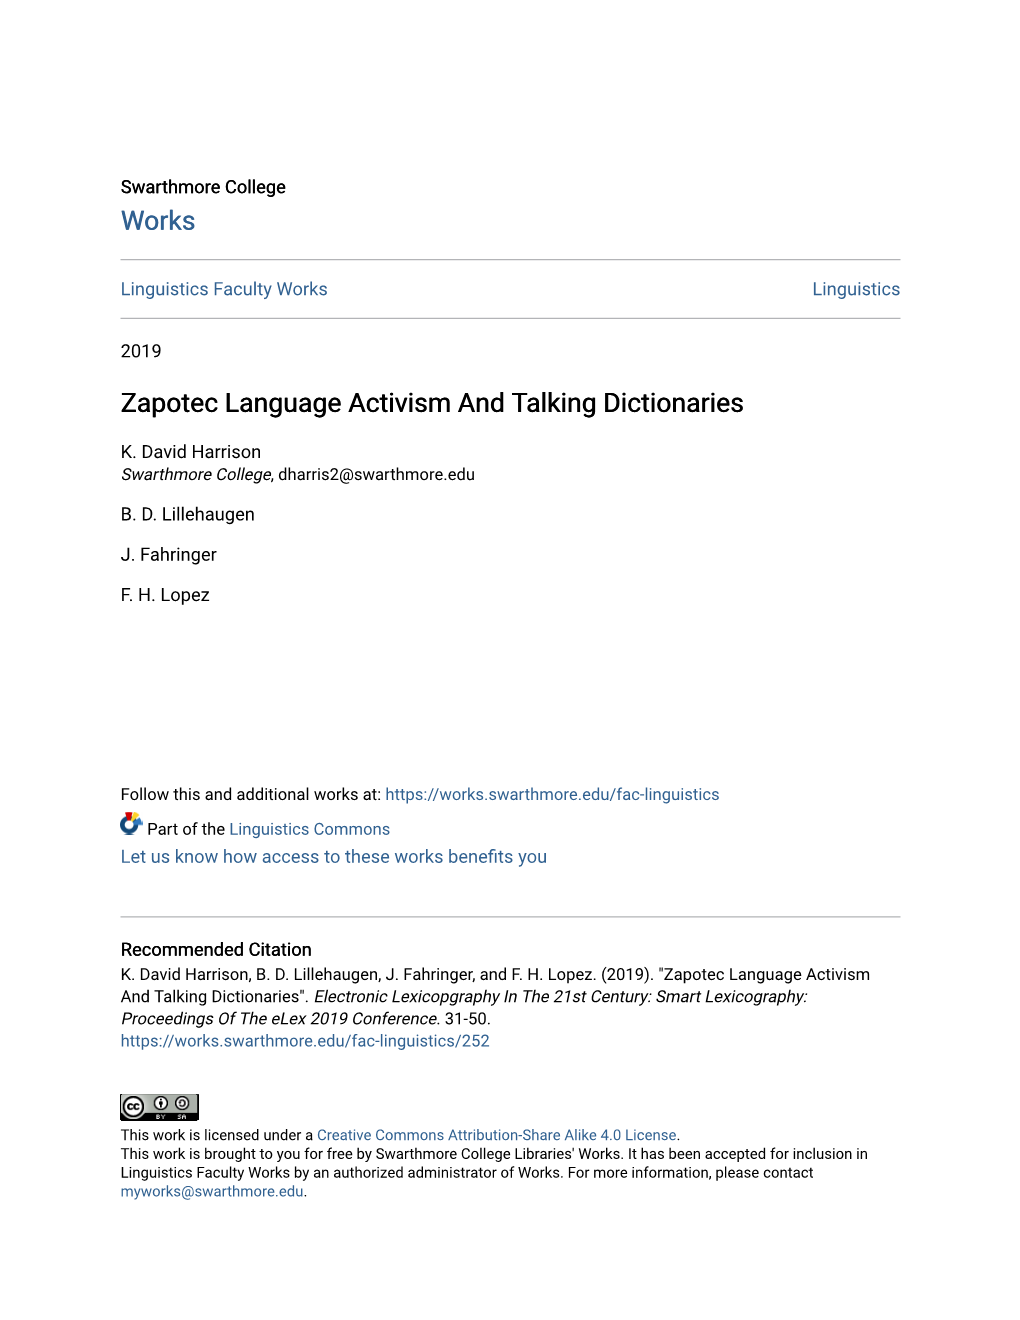 Zapotec Language Activism and Talking Dictionaries